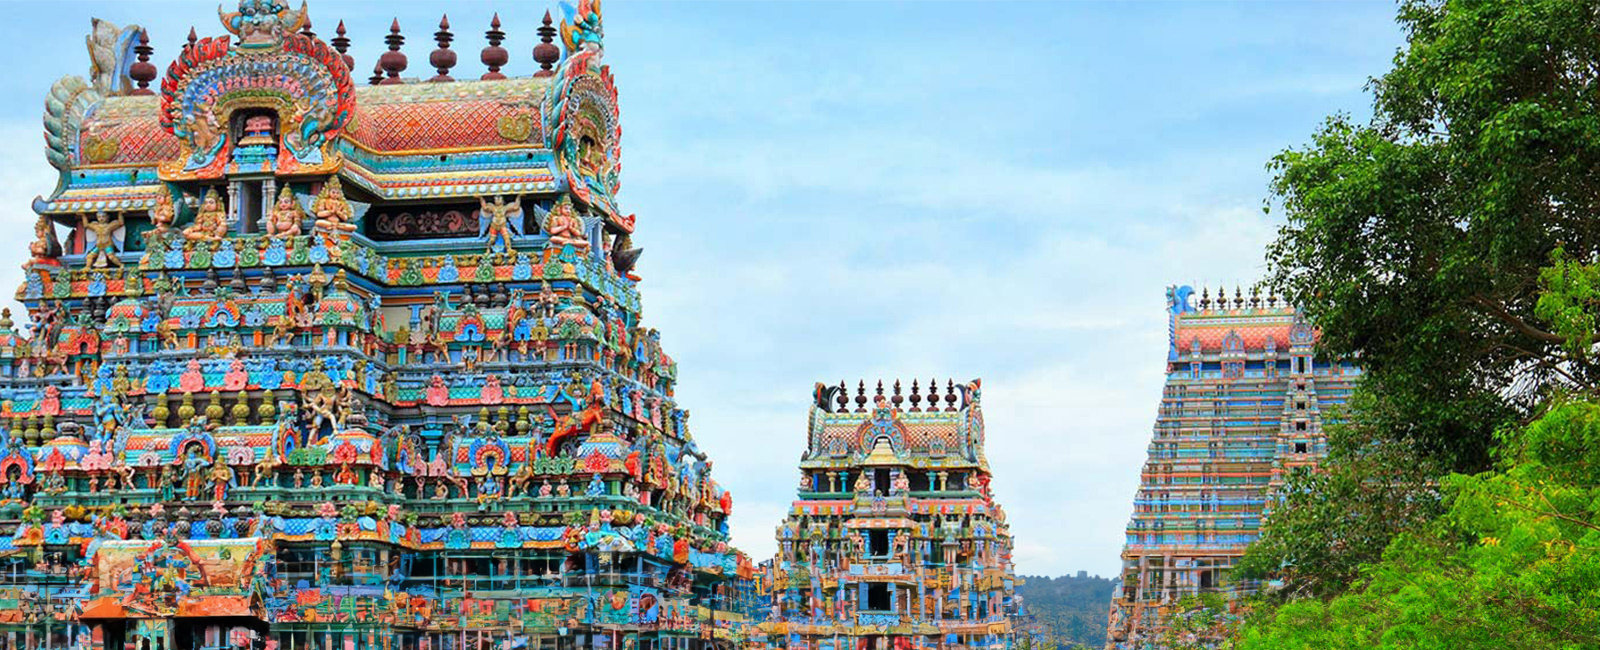 Sri Ranganathaswamy Temple in Srirangam, Tamil Nadu